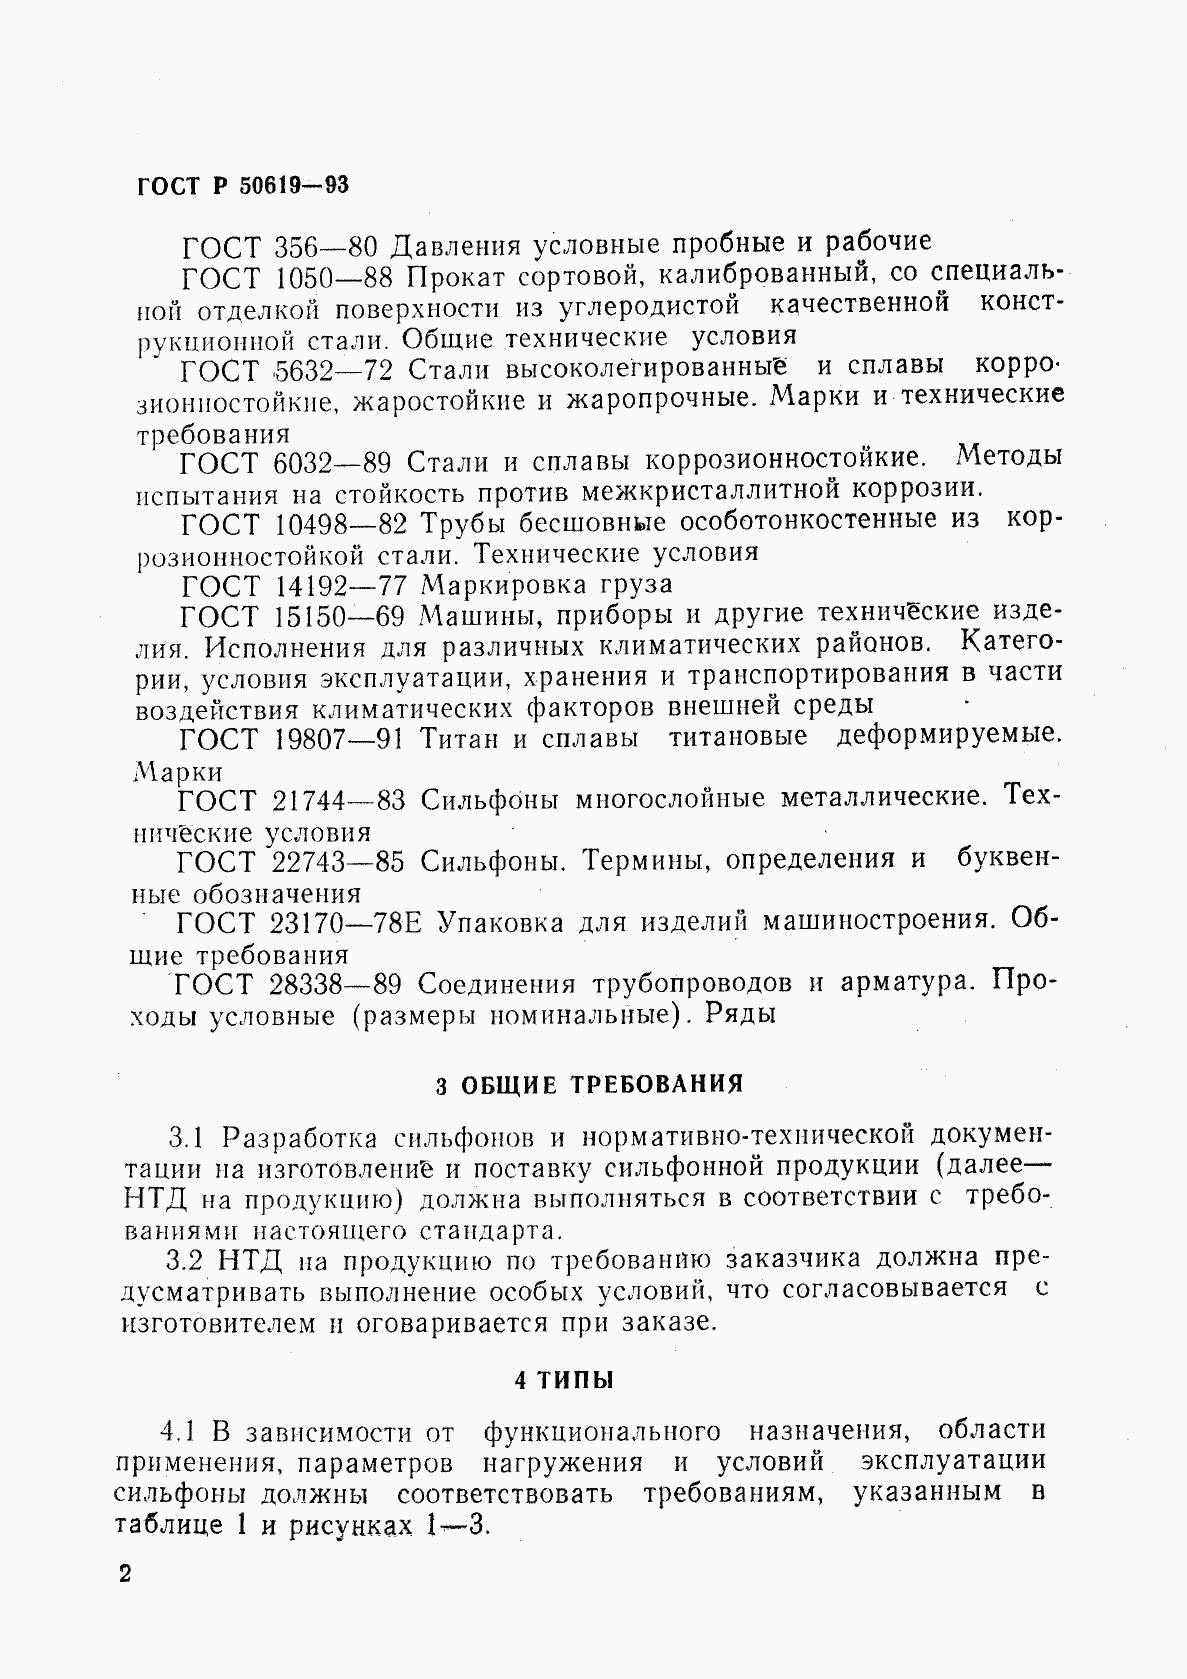 ГОСТ Р 50619-93, страница 5